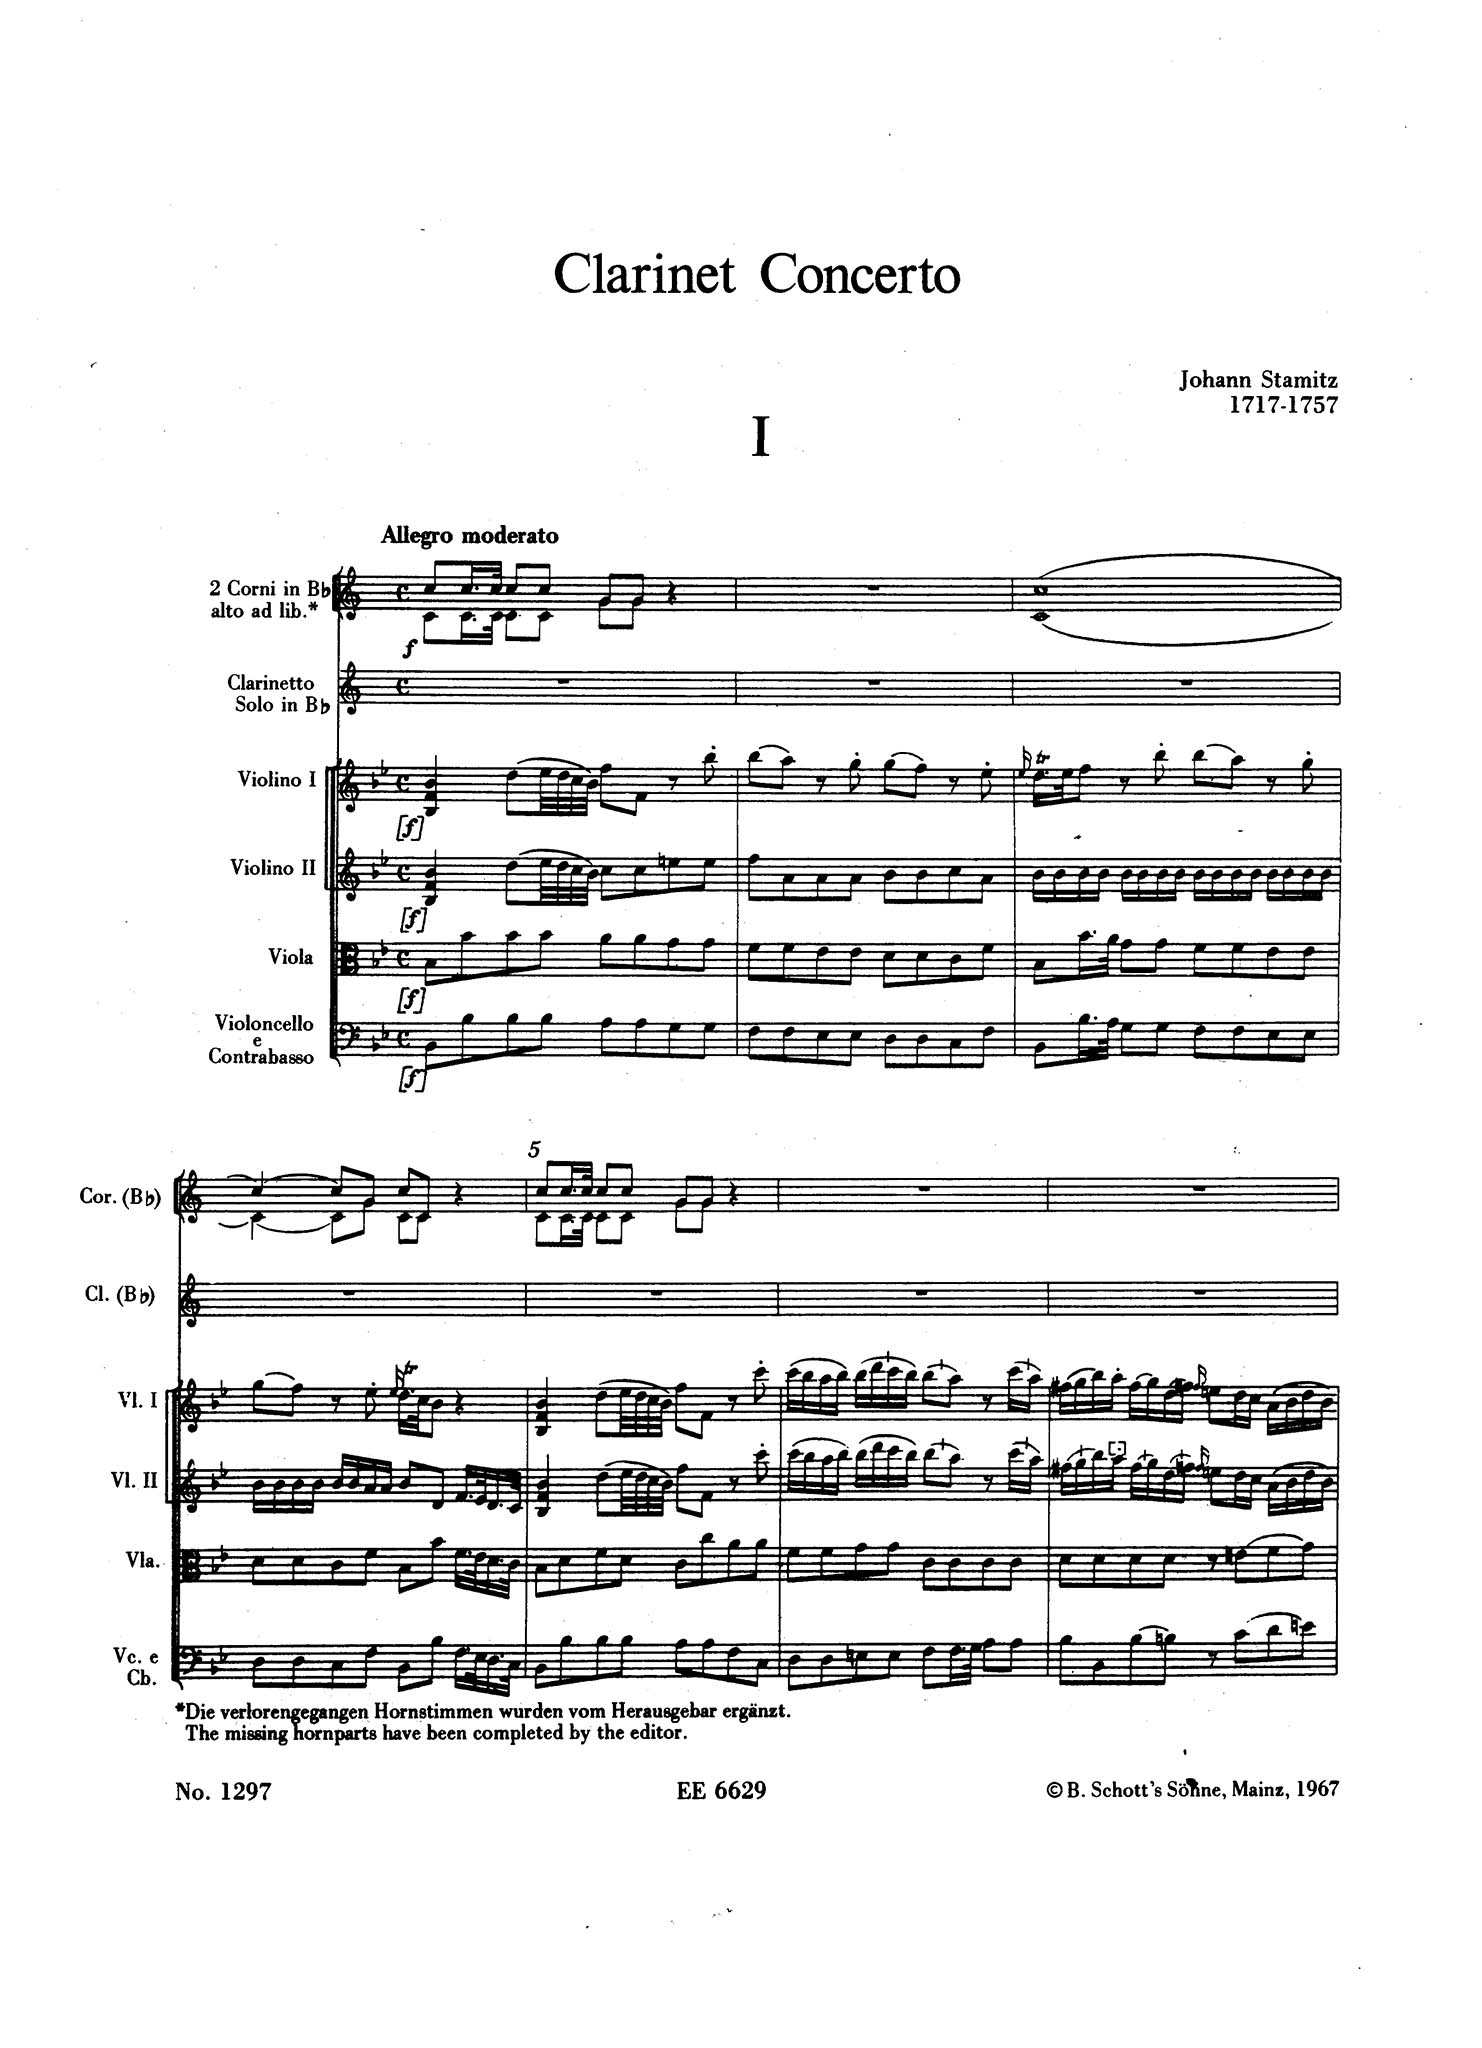 Clarinet Concerto in B-flat Major - Movement 1